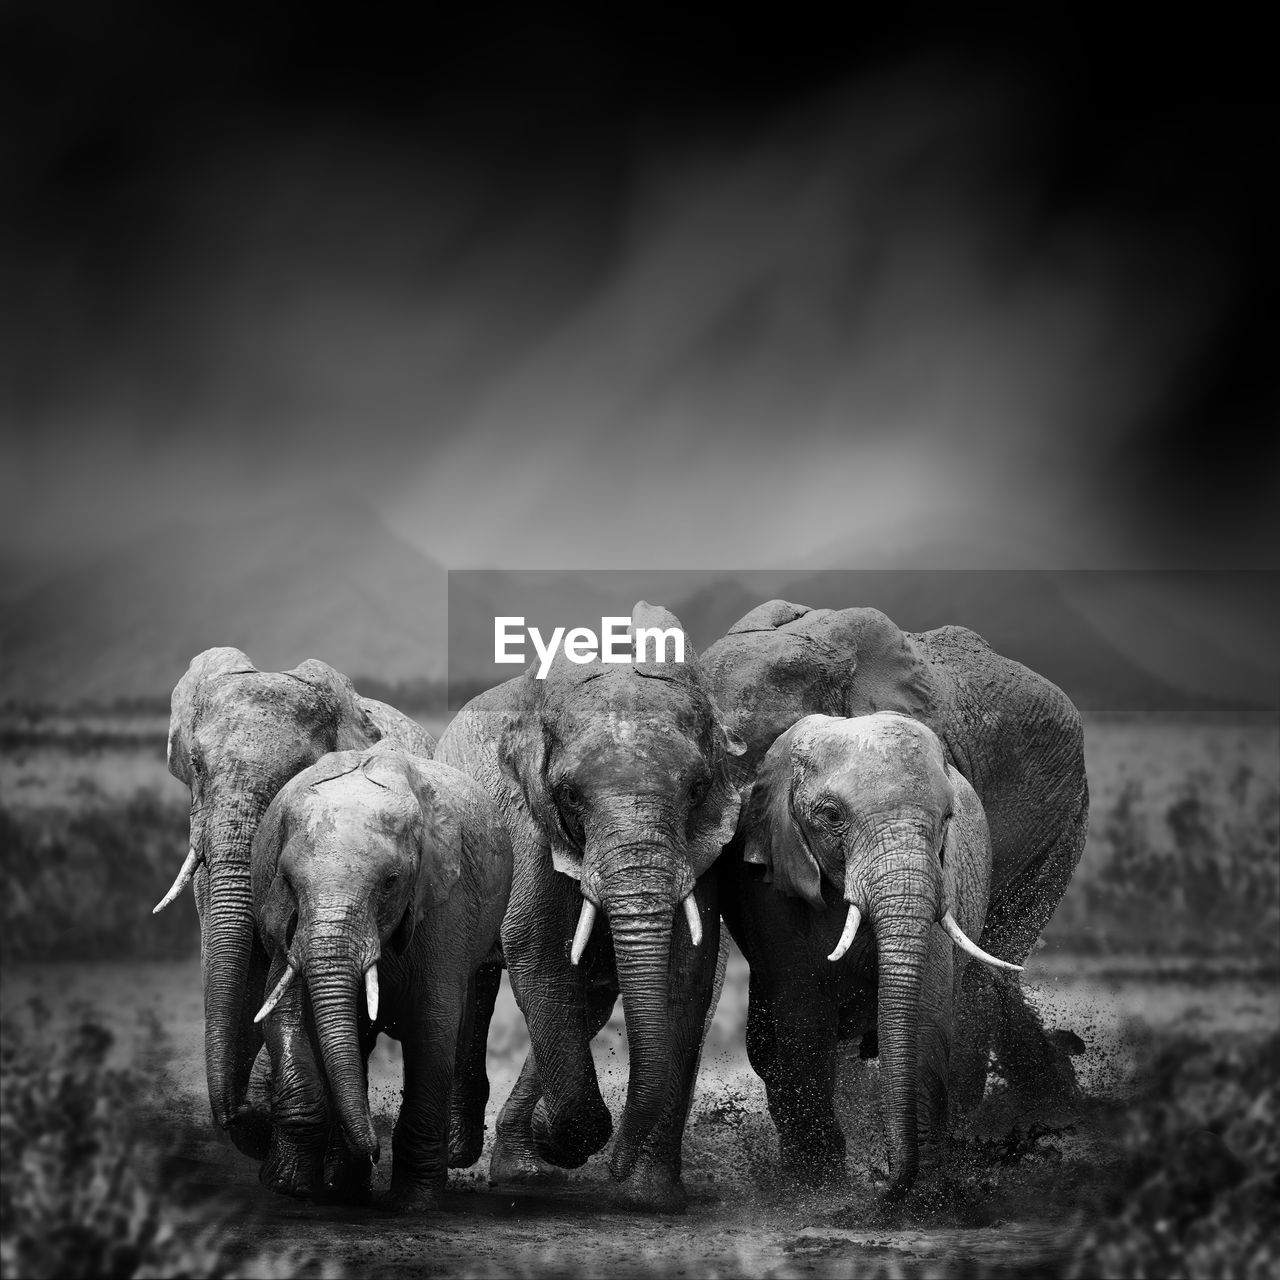 Dramatic black and white image of a elephant on black background